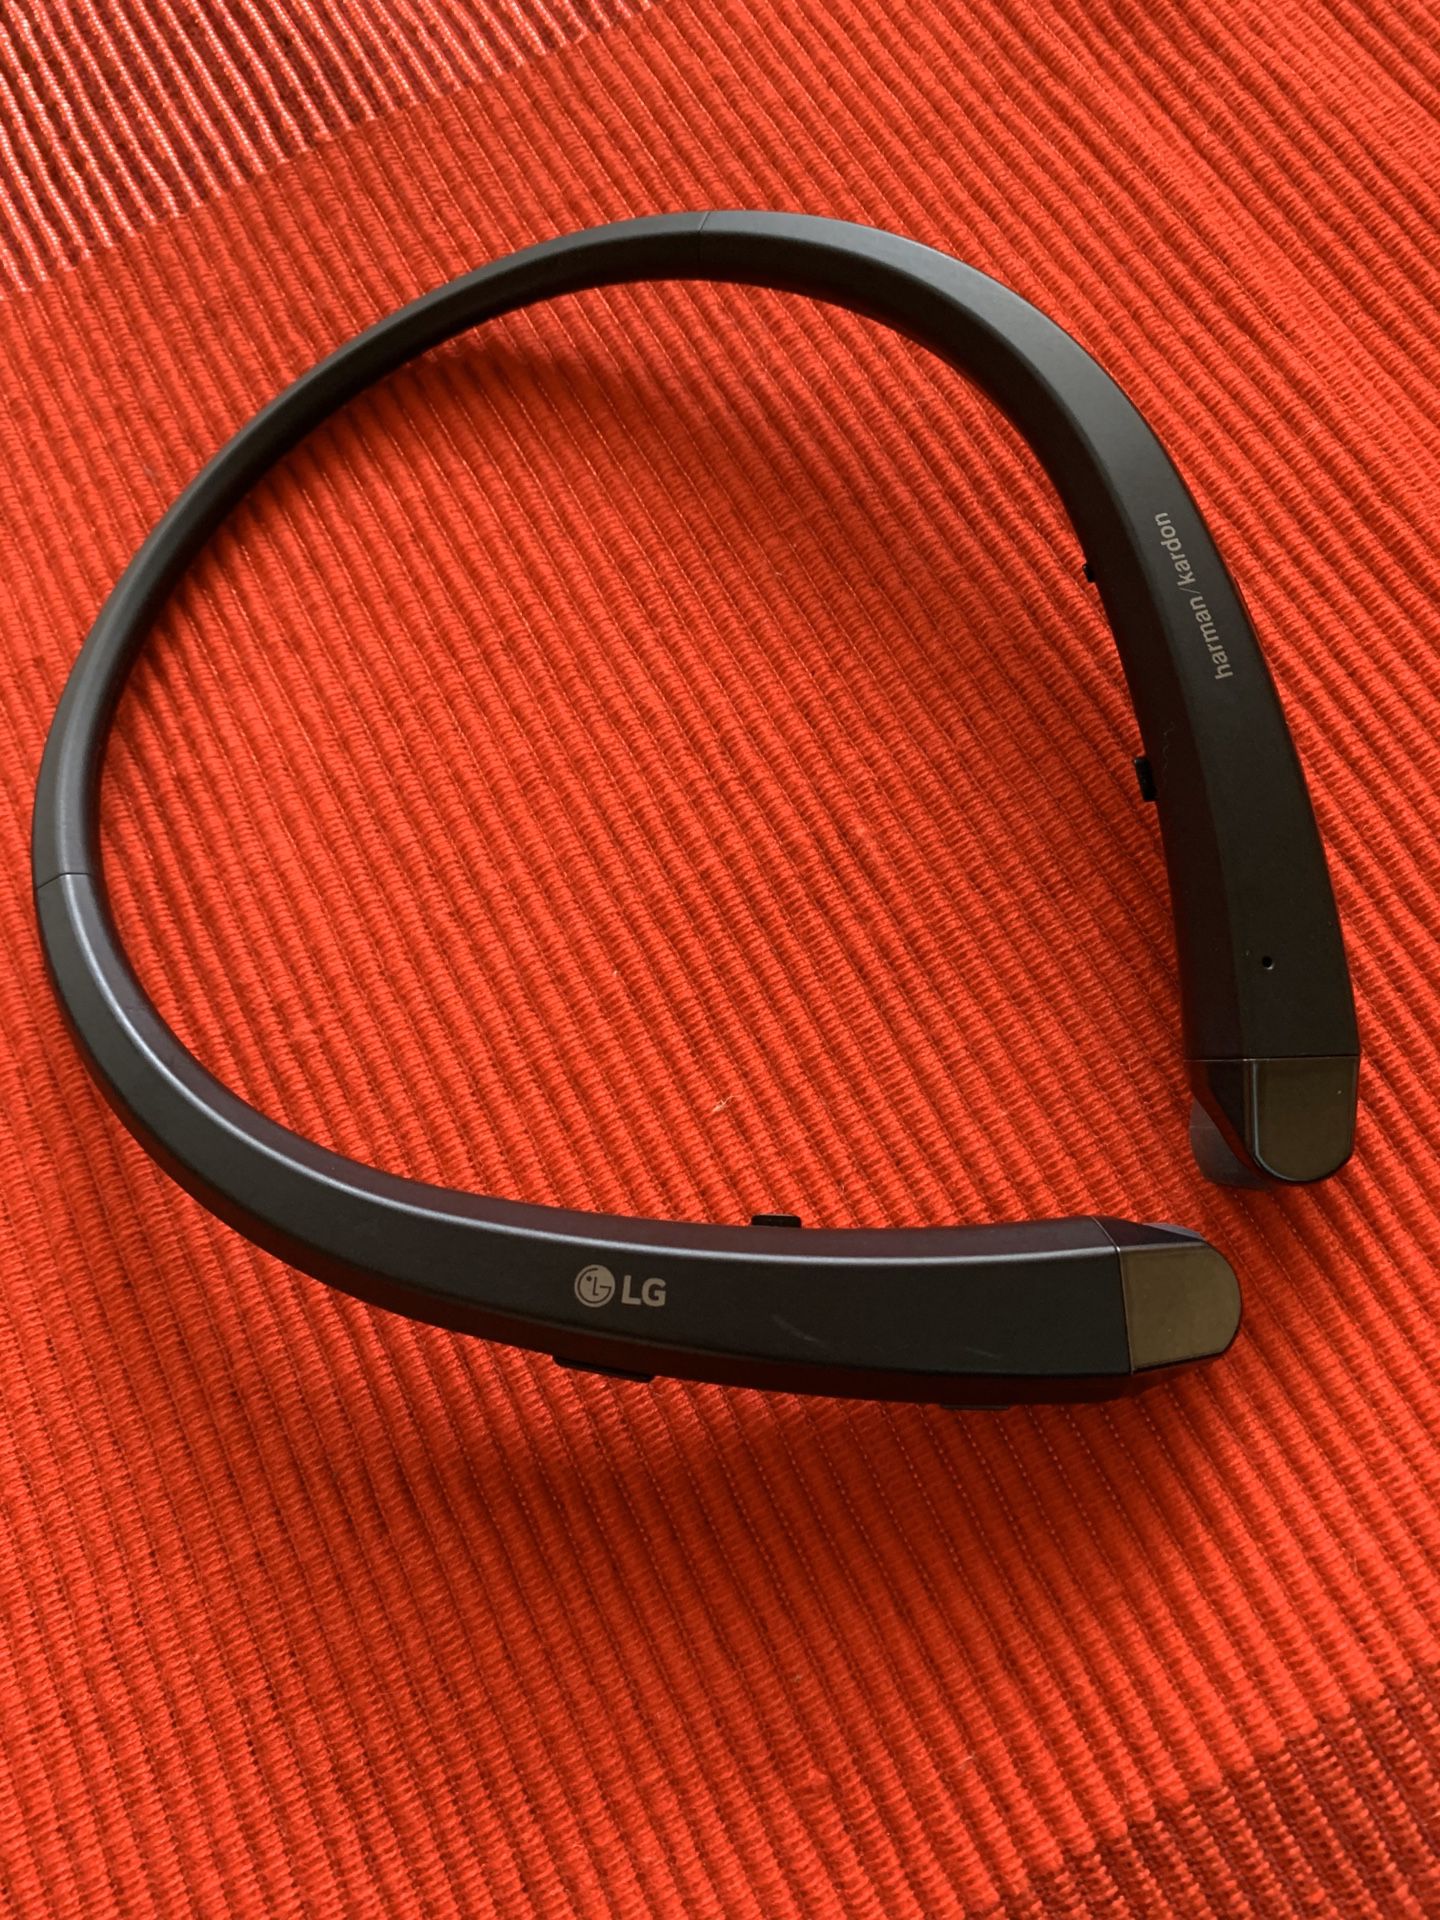 LG wireless stereo headset